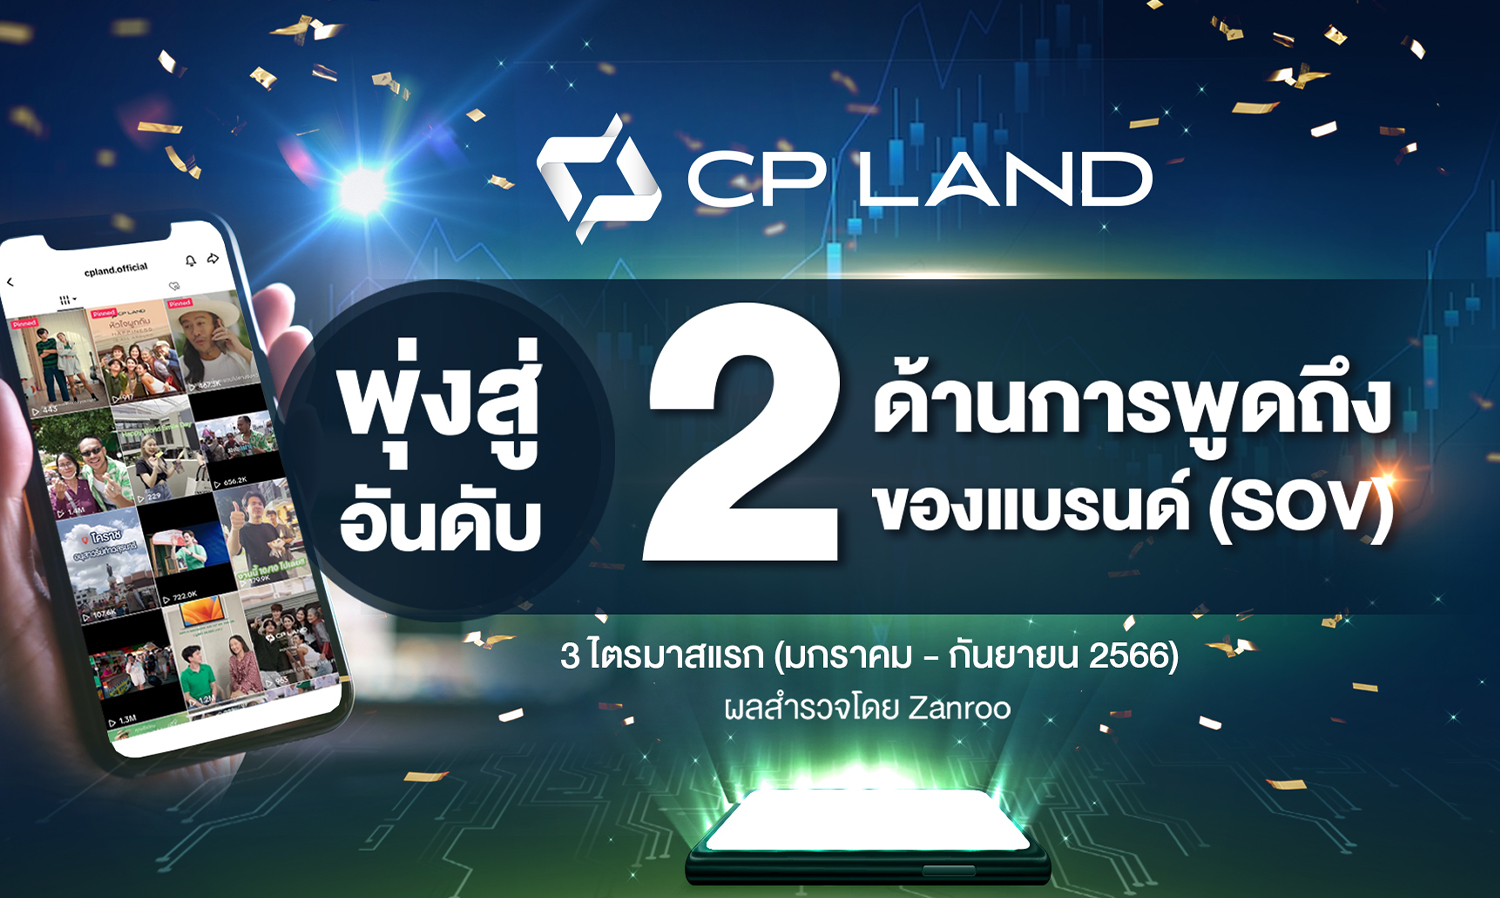 cp-land-สร้างปรากฎการณ์-creative-marketing-ถูกจัดอัน